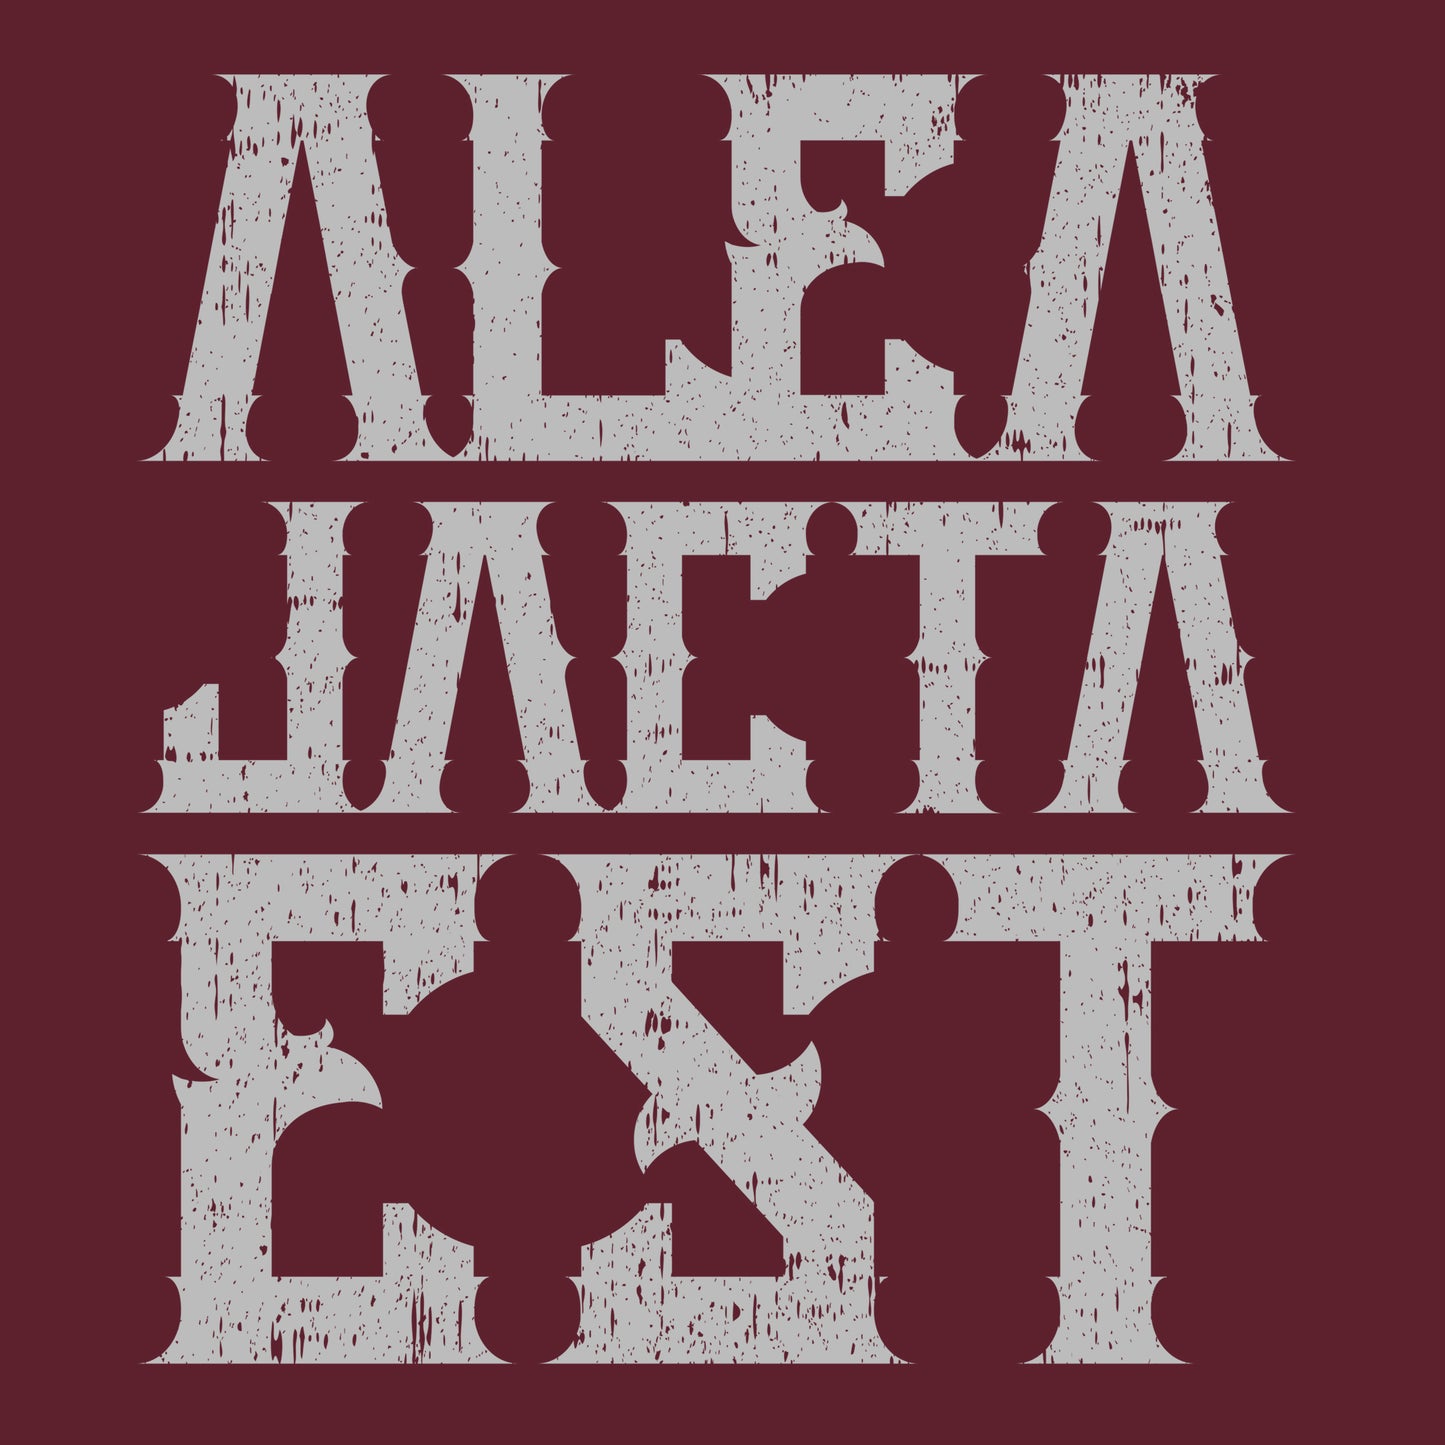 ALEA JACTA EST T-shirt (BURGUNDY, MEN)